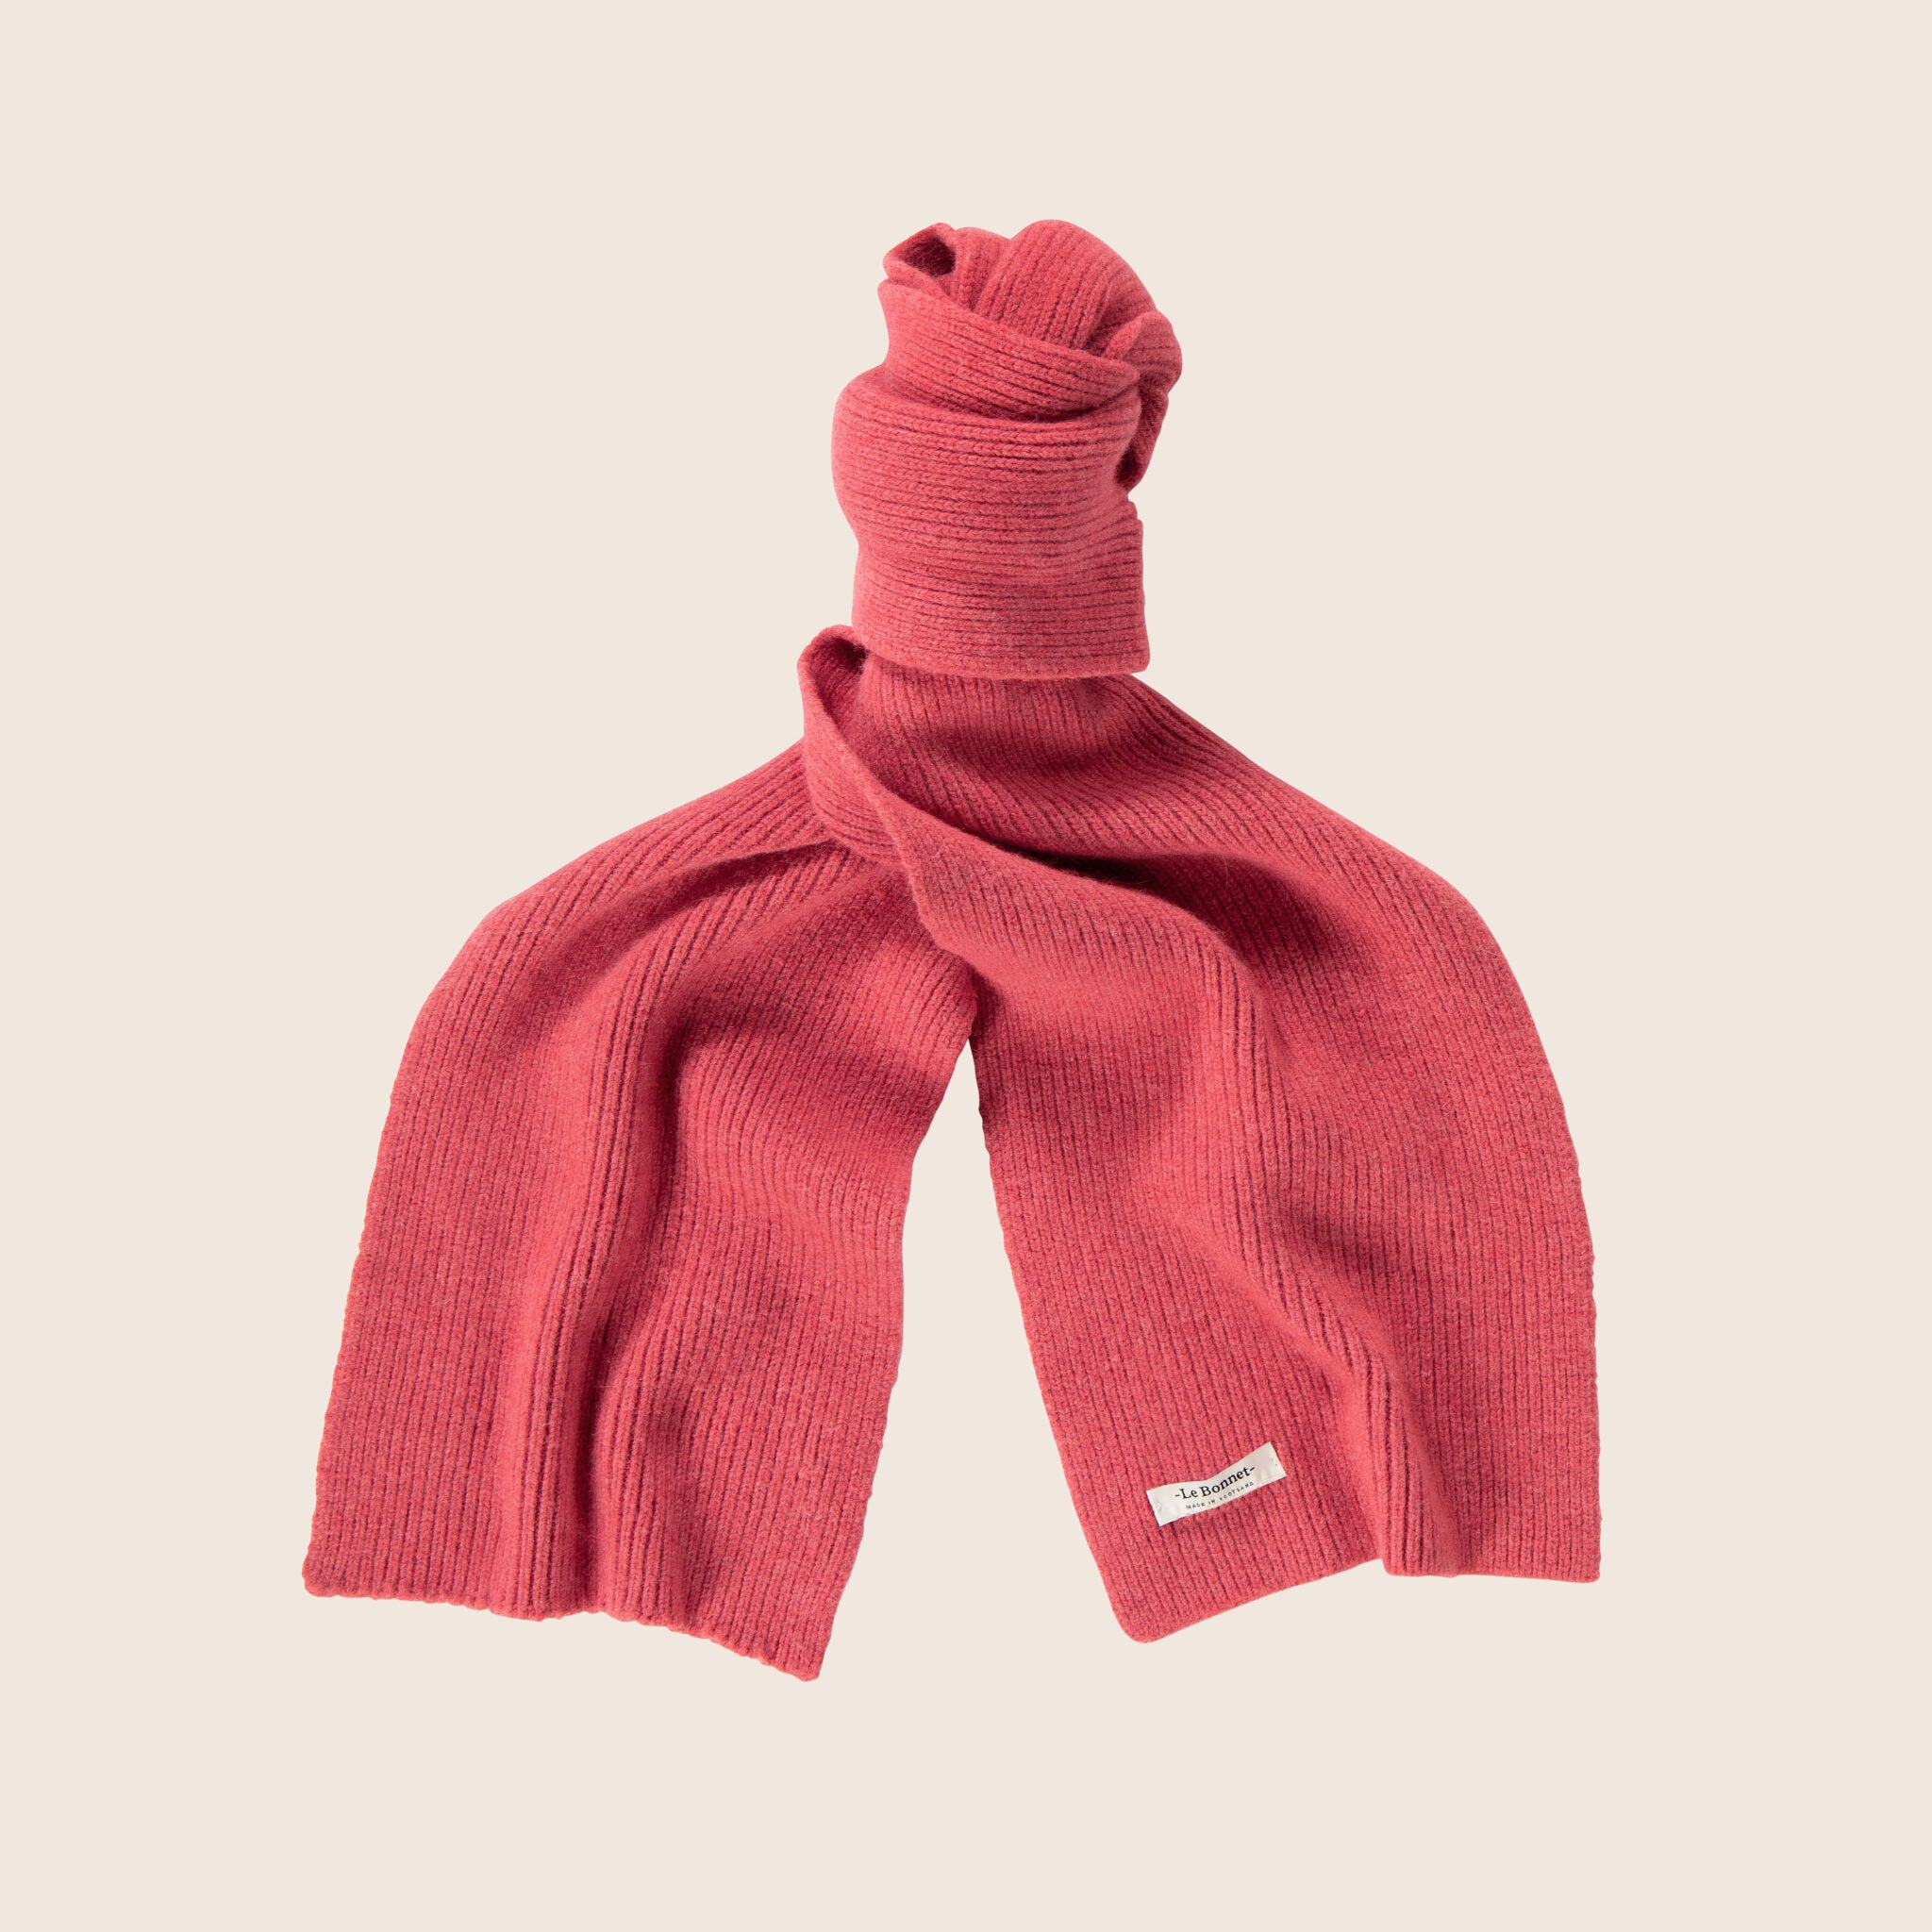 Salmon colored wool scarf